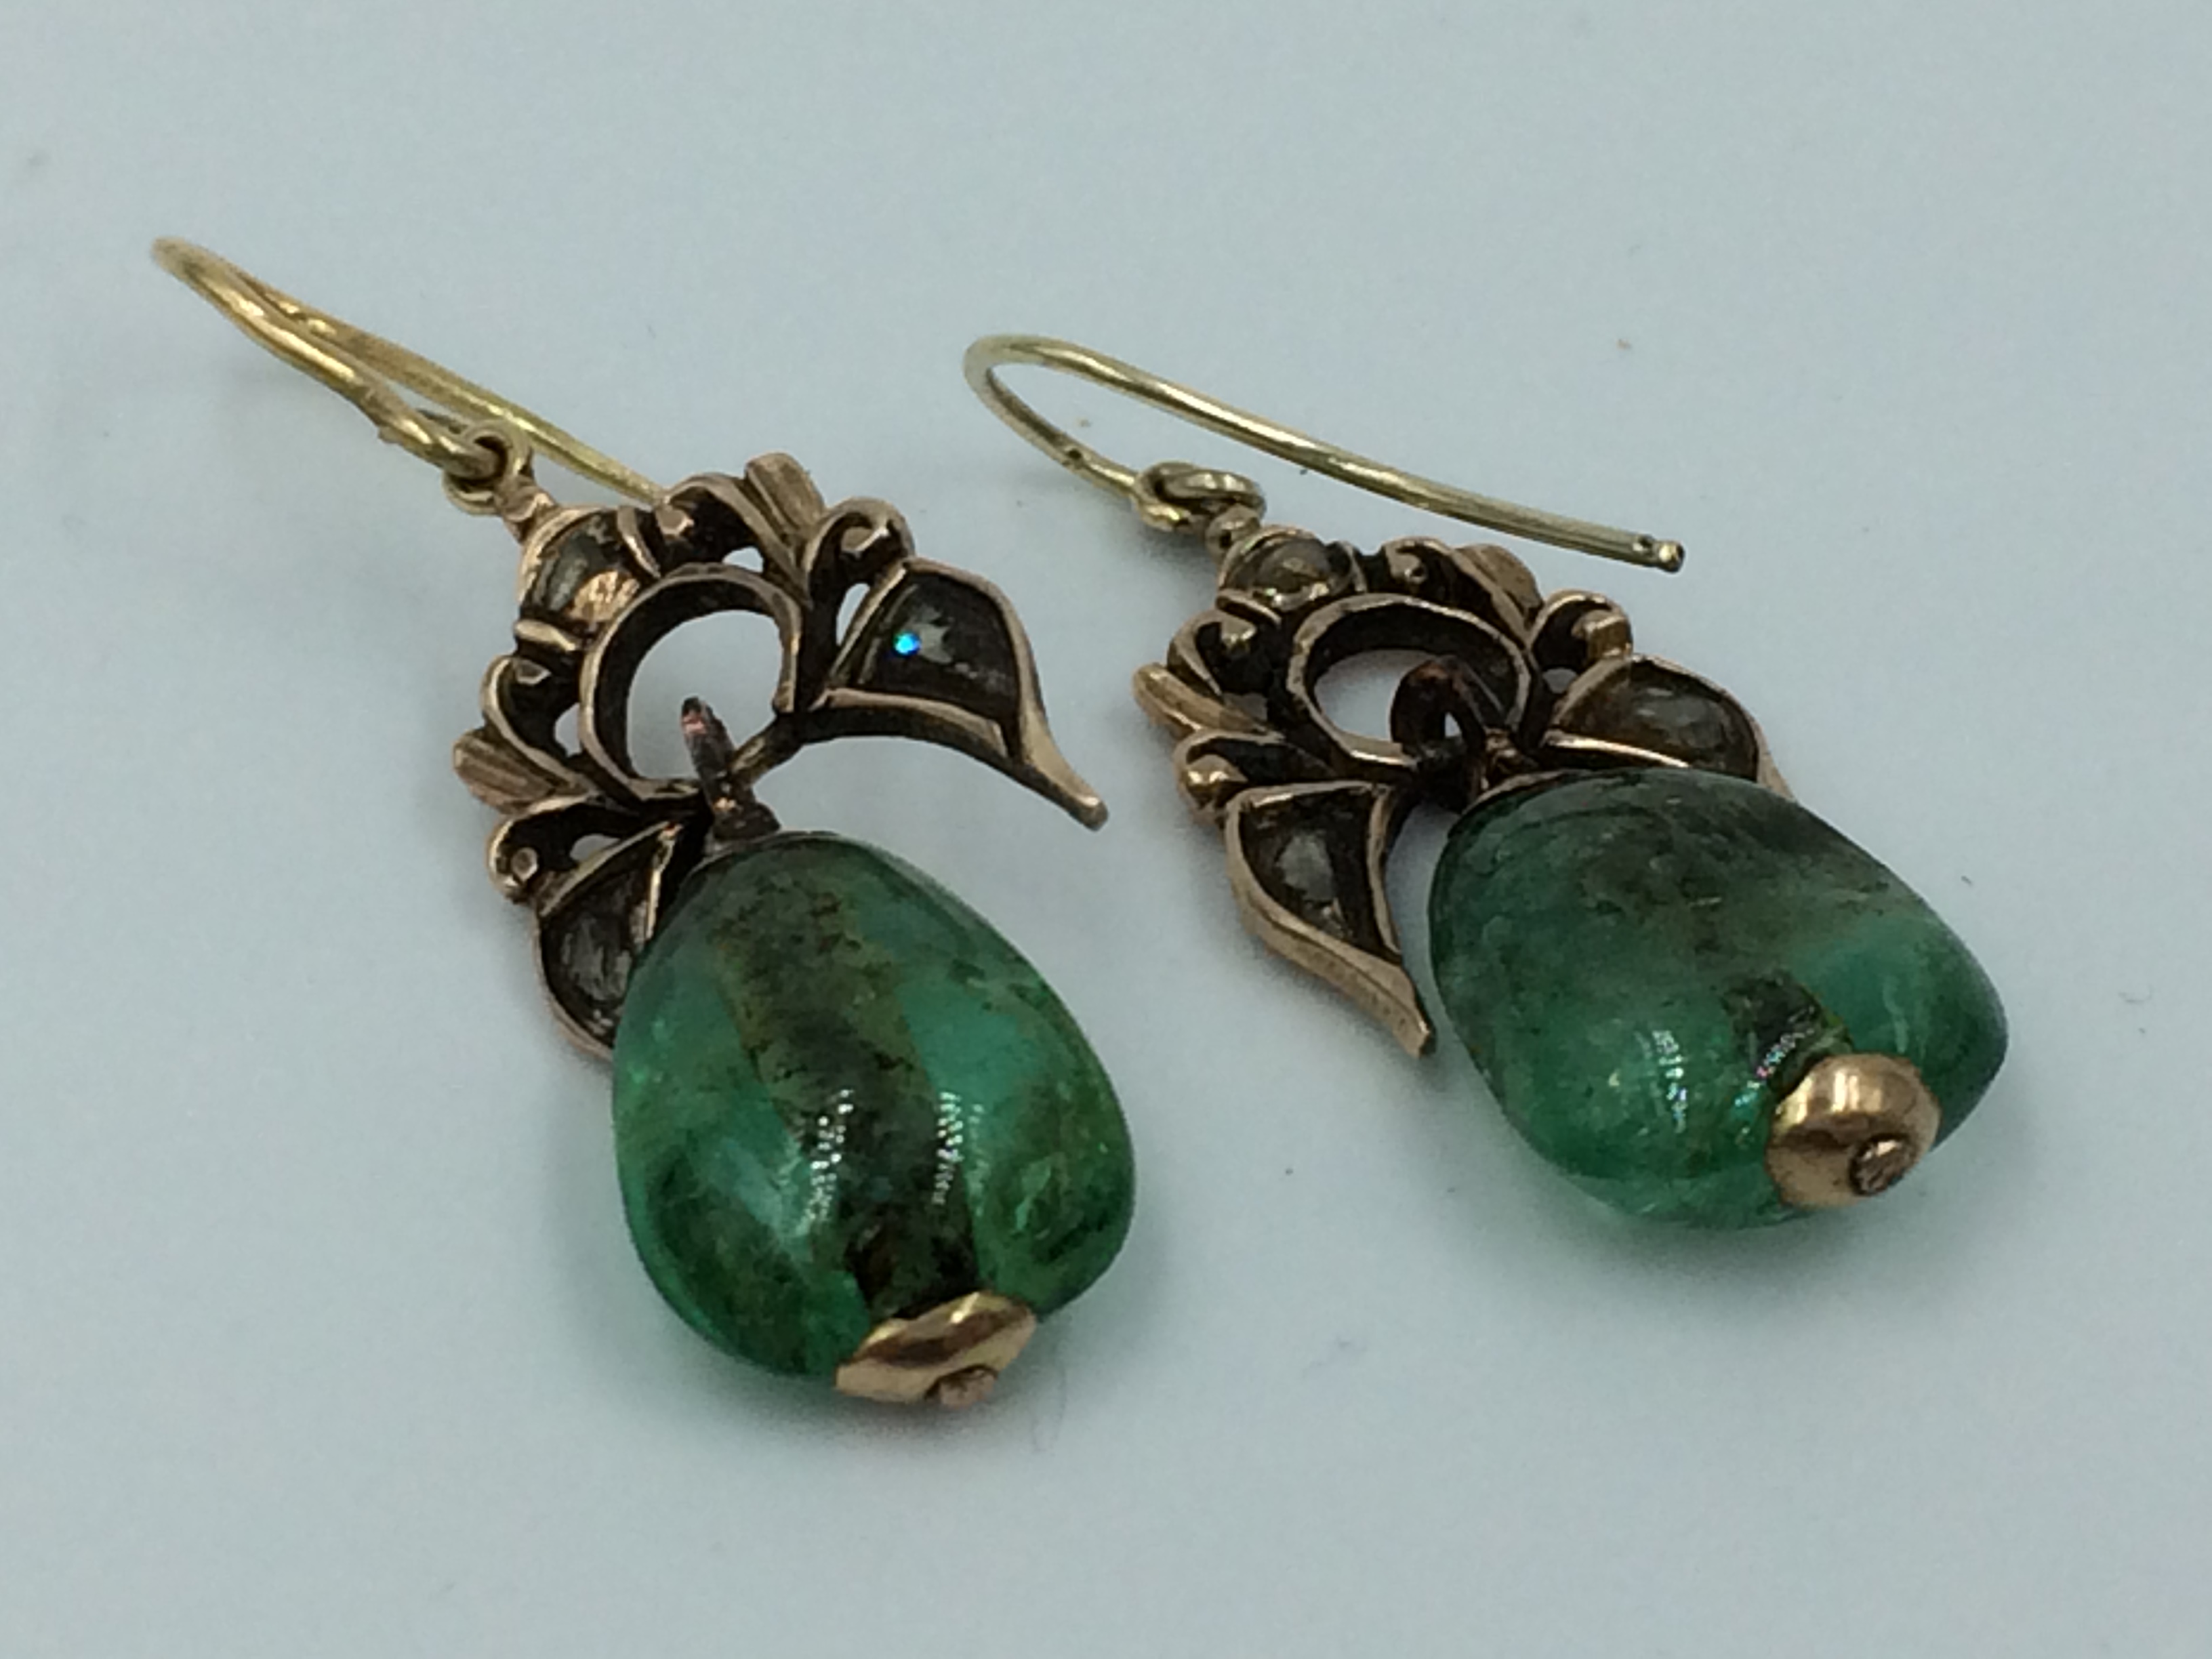 Columbian emerald earrings 12.5cts - Image 2 of 2